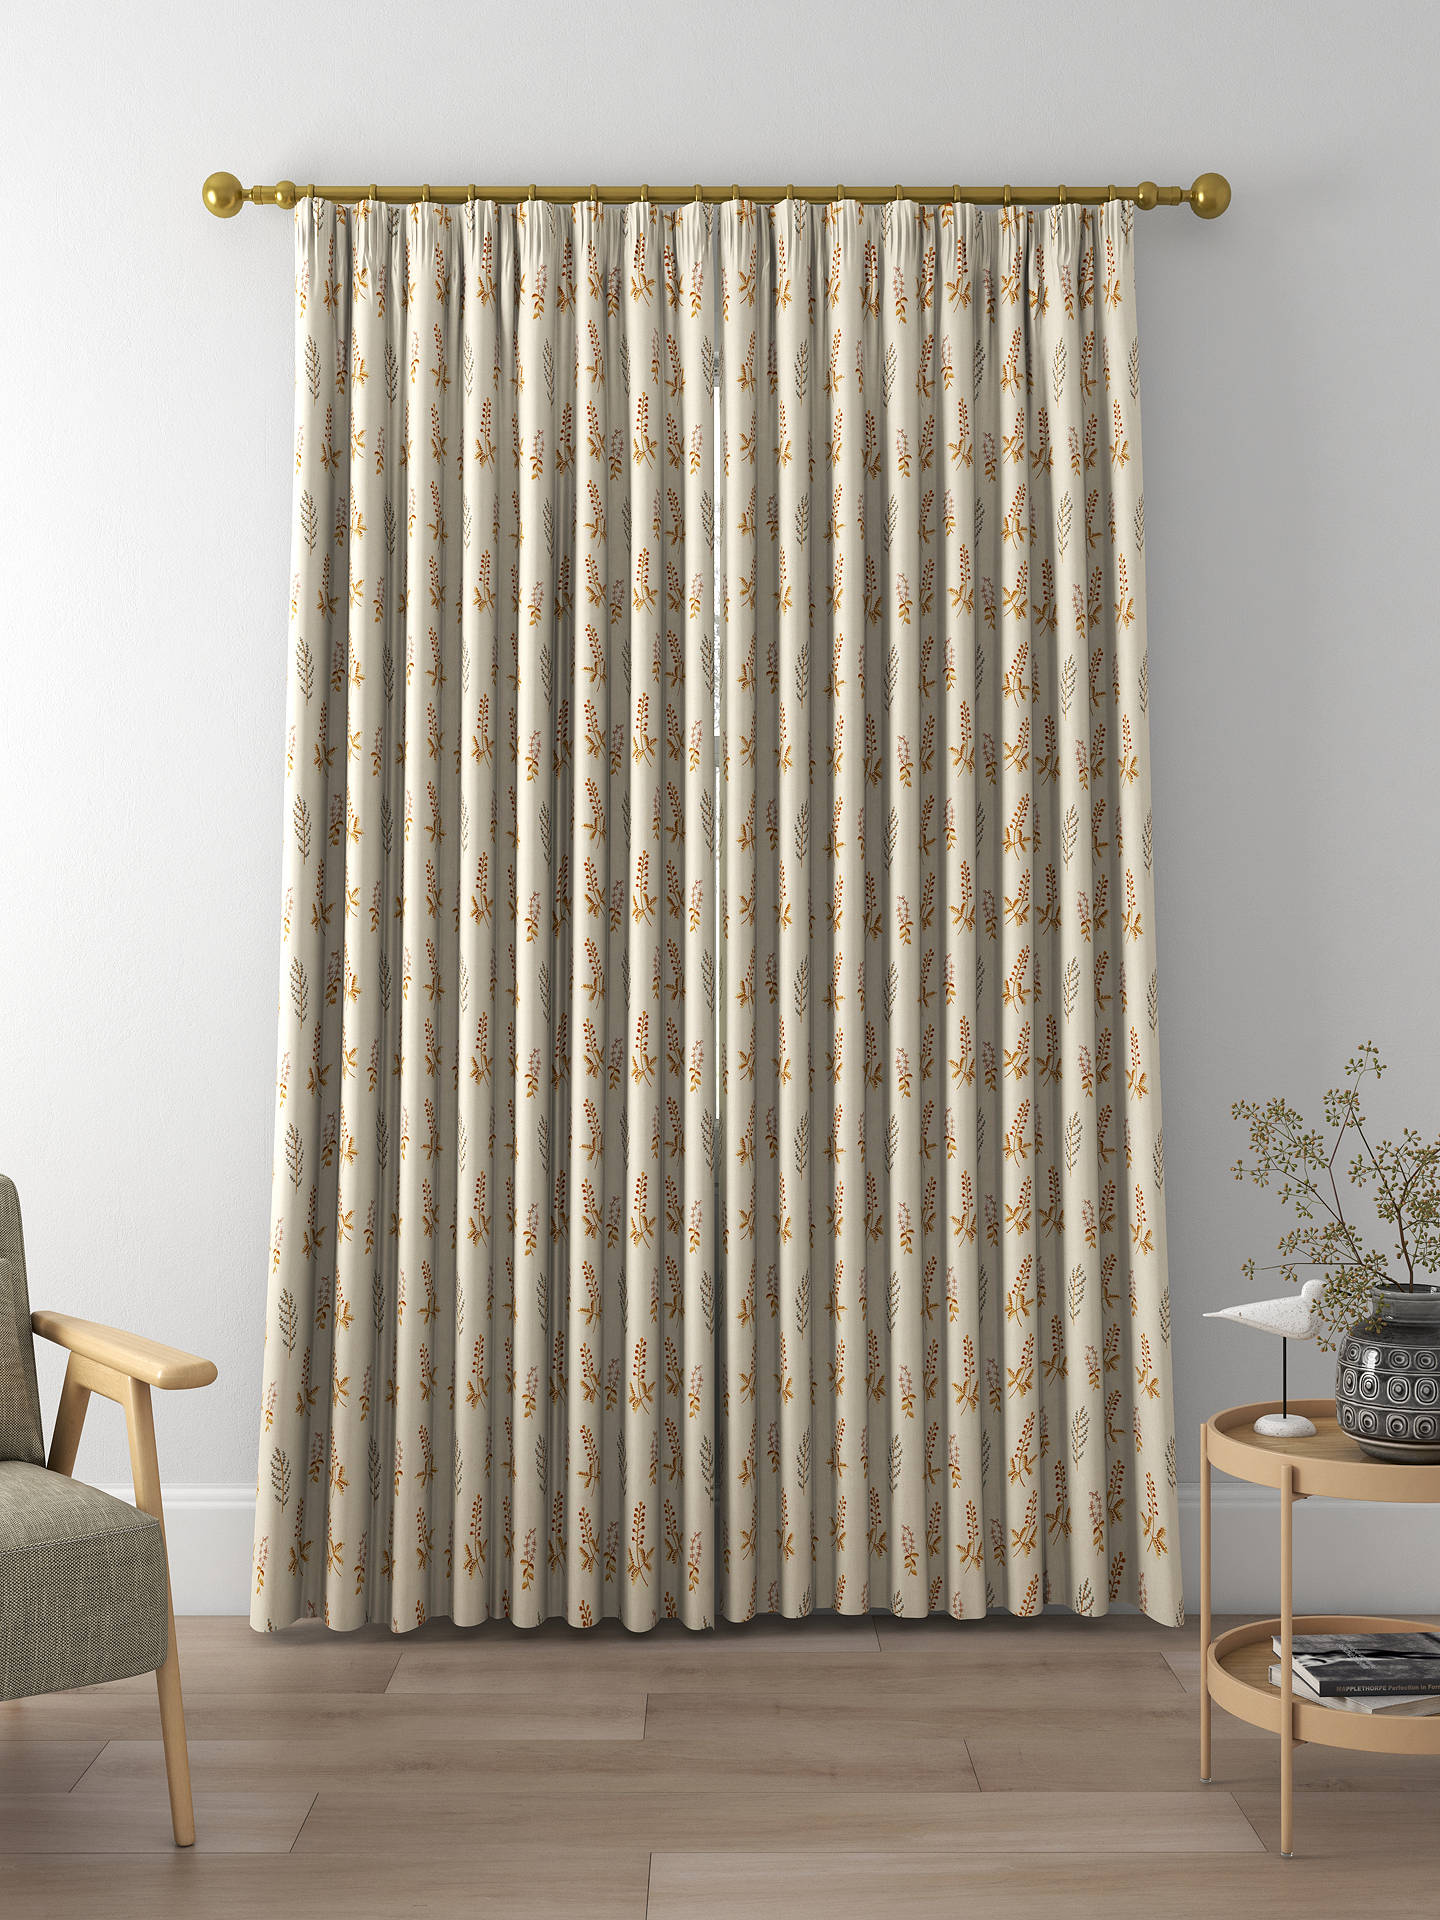 Sanderson Bilberry Made to Measure Curtains, Denim/Barley